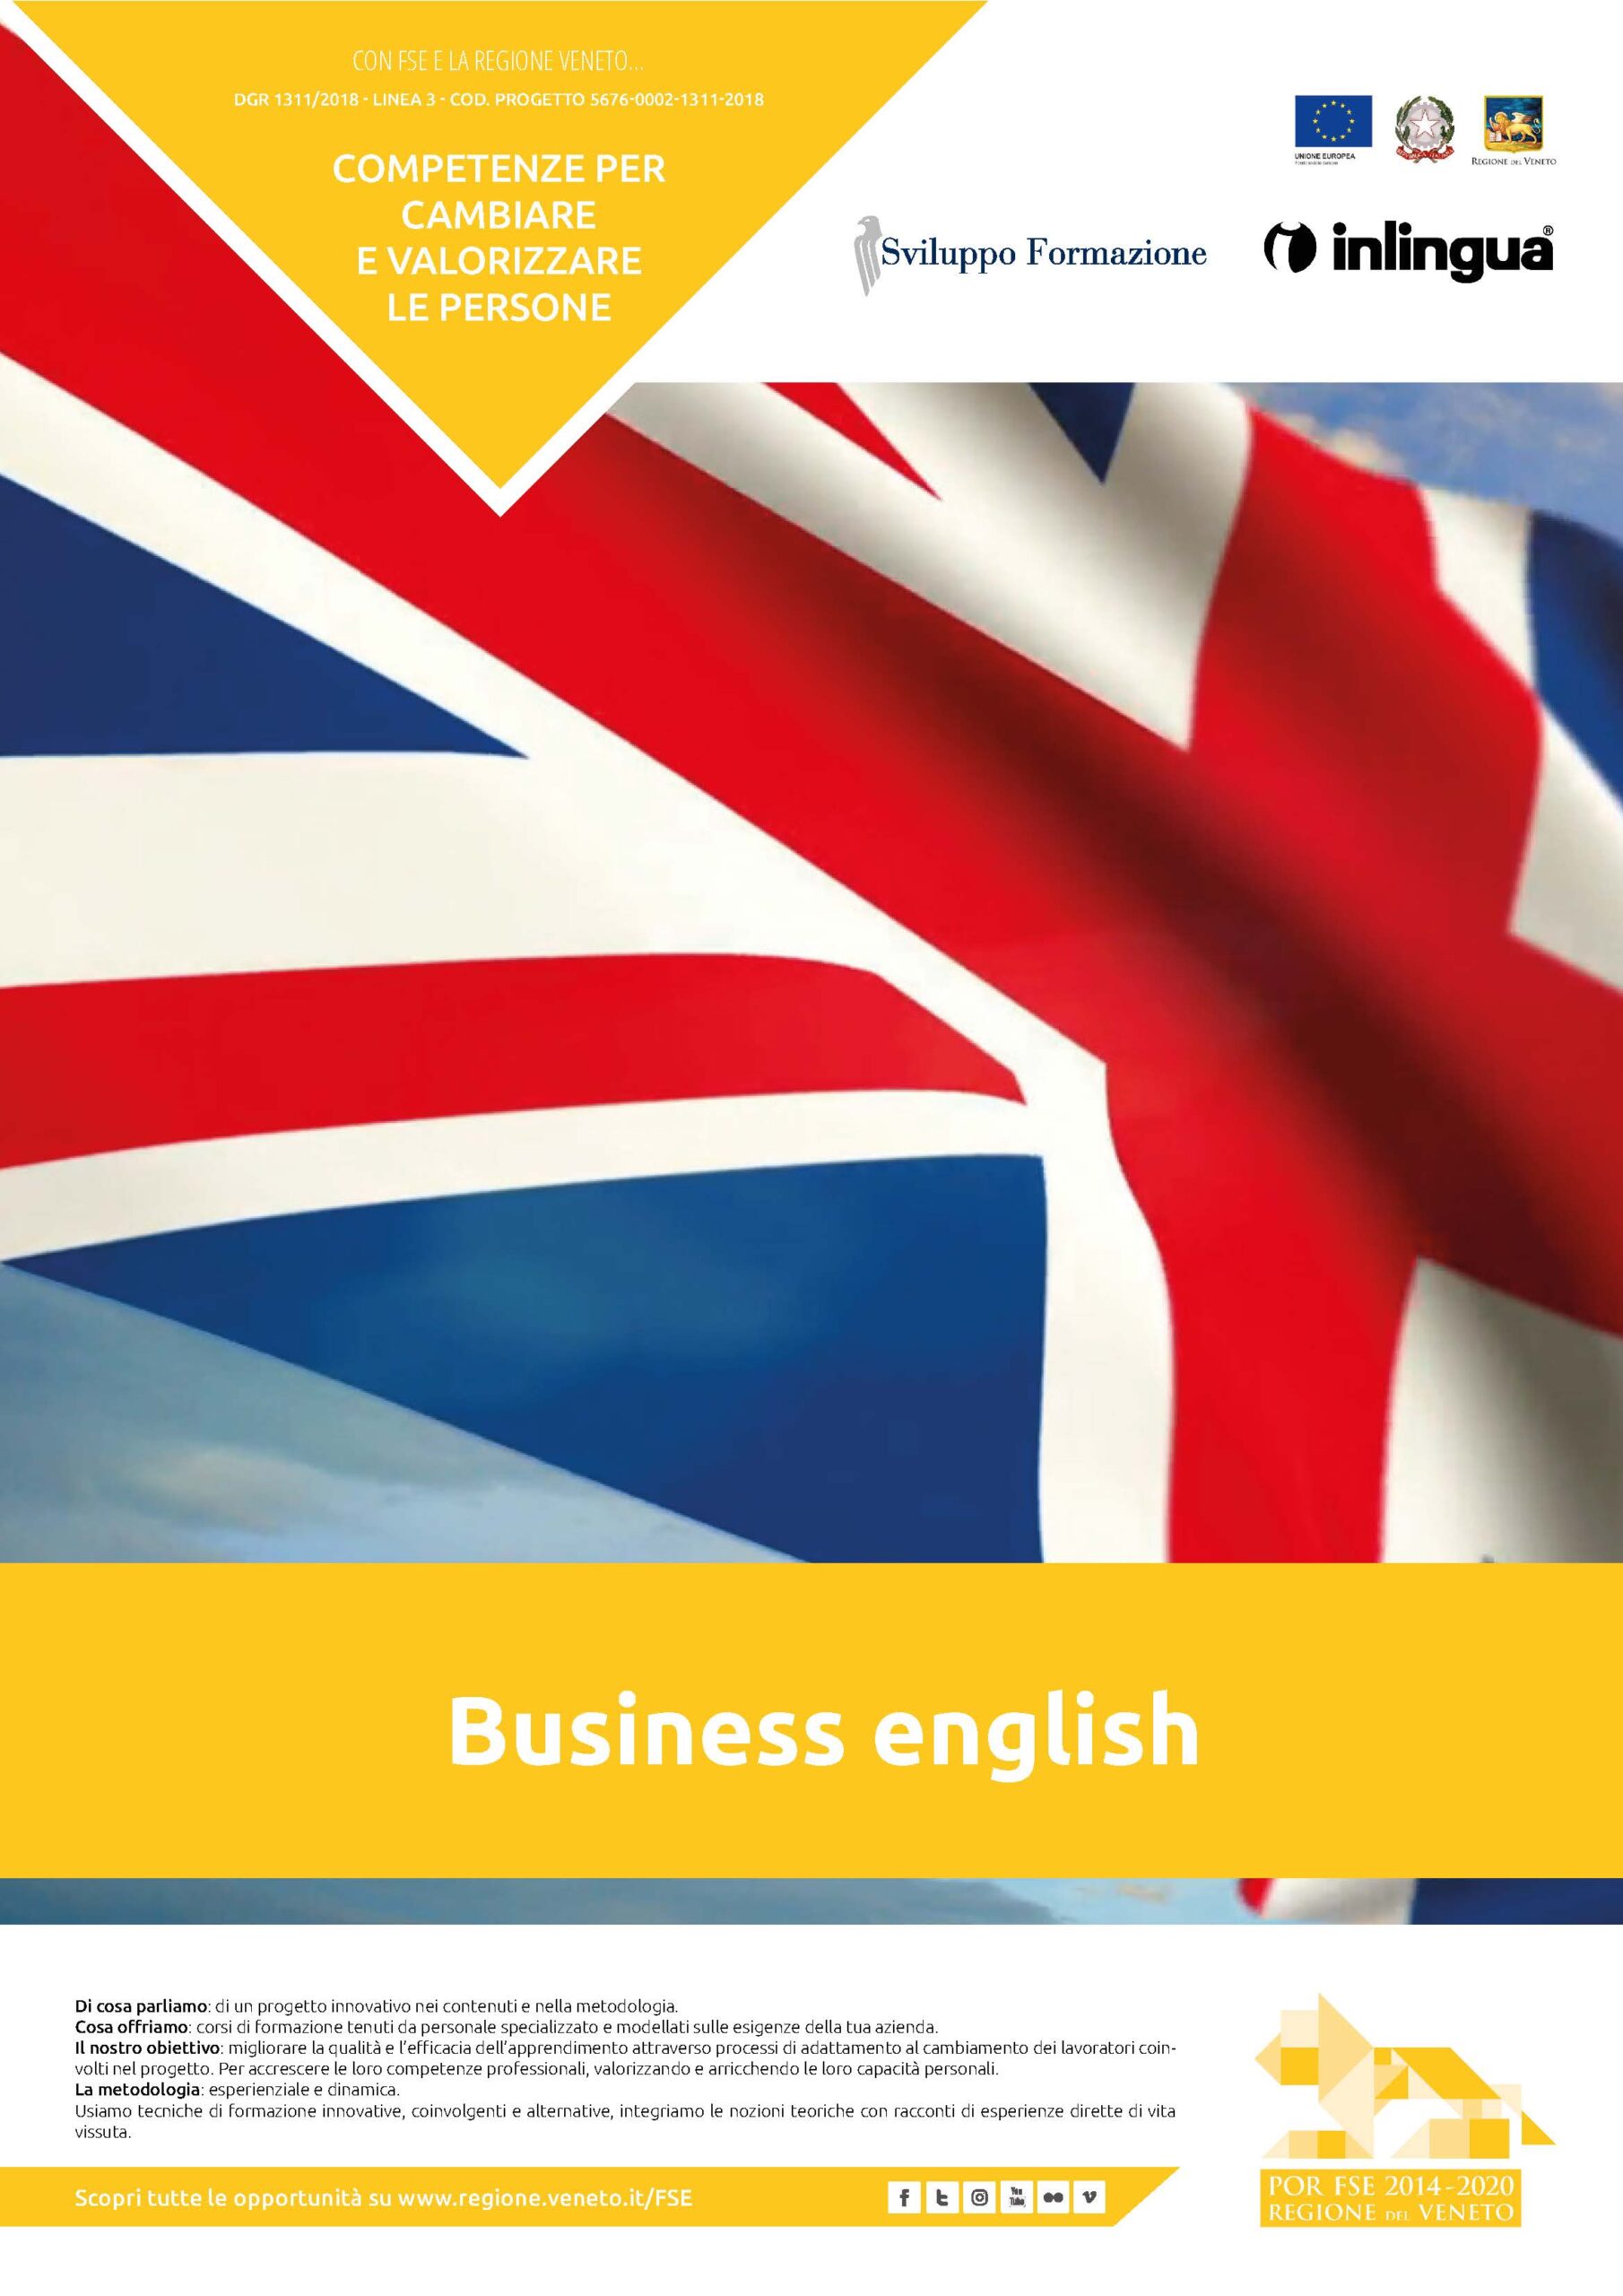 DGR 1311/2018: business english